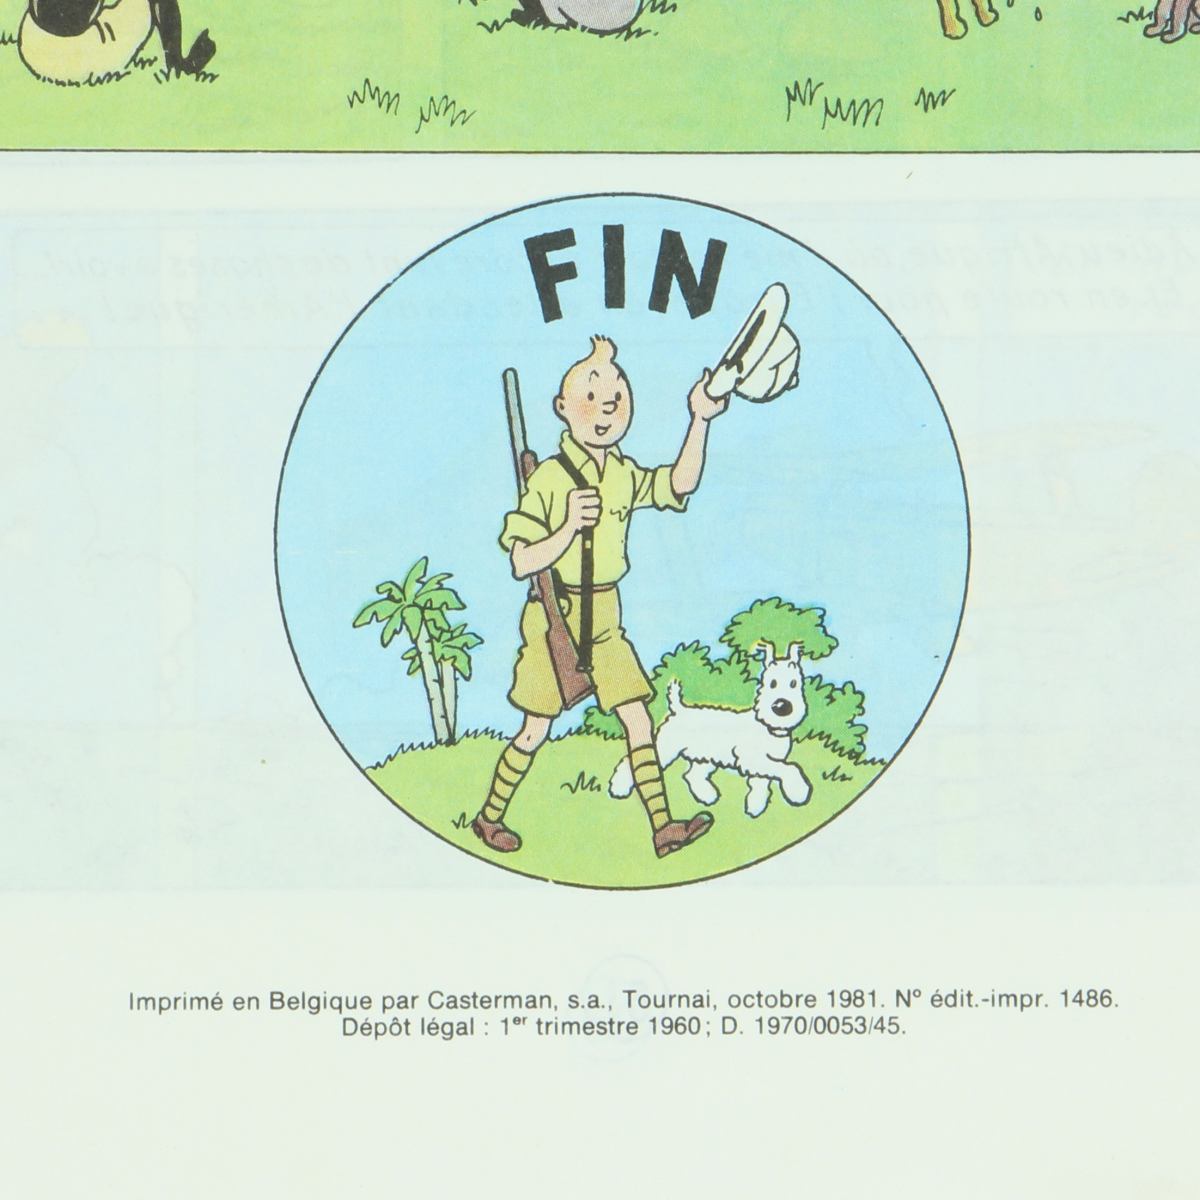 Afbeeldingen van Tintin au Congo - Kuifje